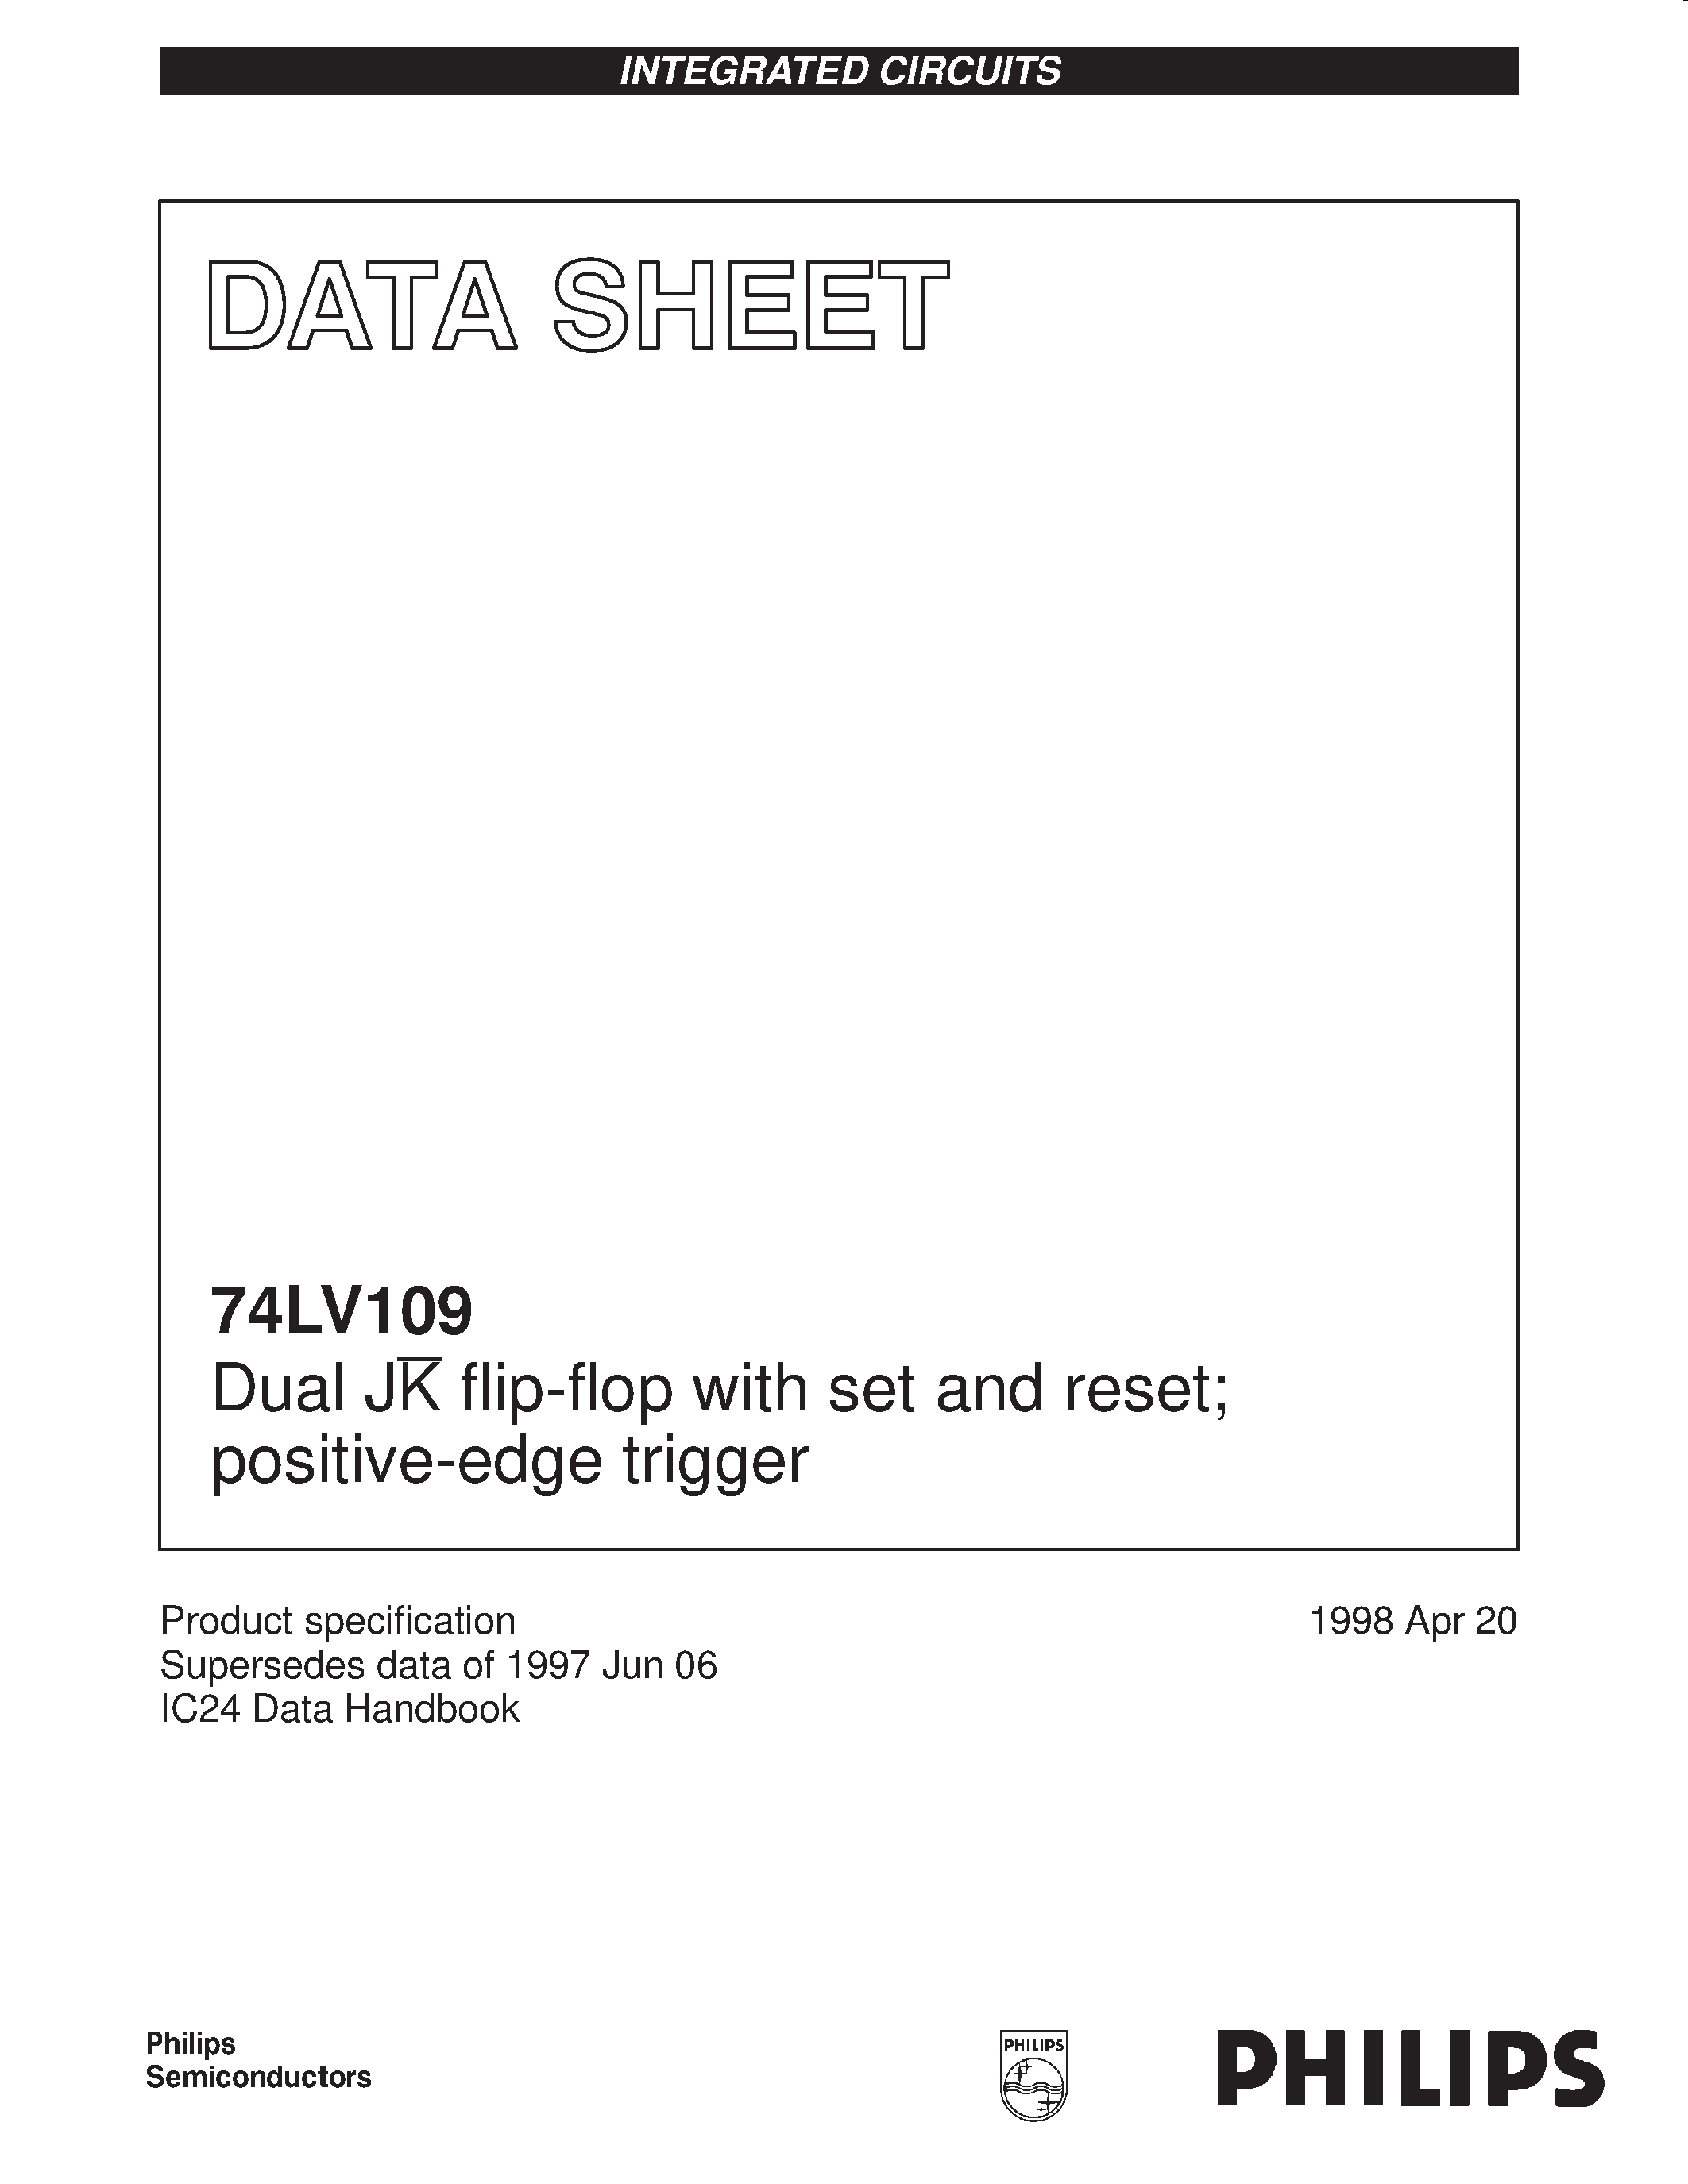 Даташит 74LV109 - Dual JK flip-flop with set and reset; positive-edge trigger страница 1